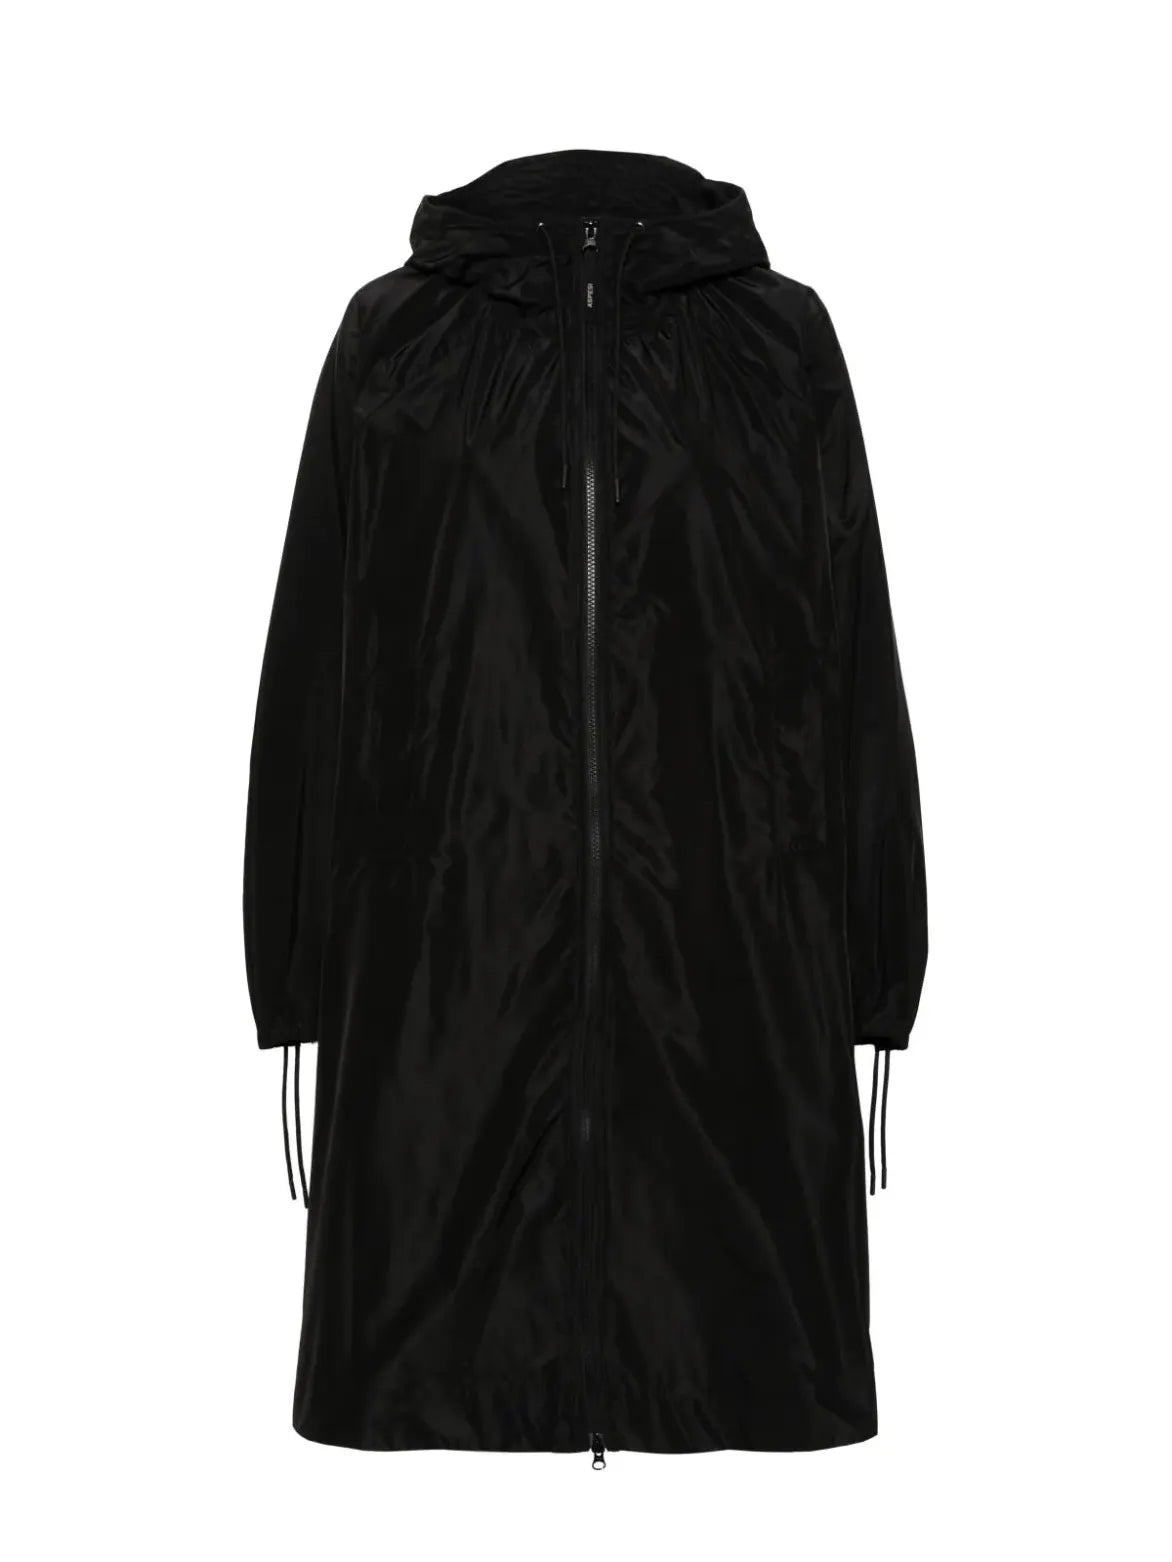 Parka sindly long coat, black